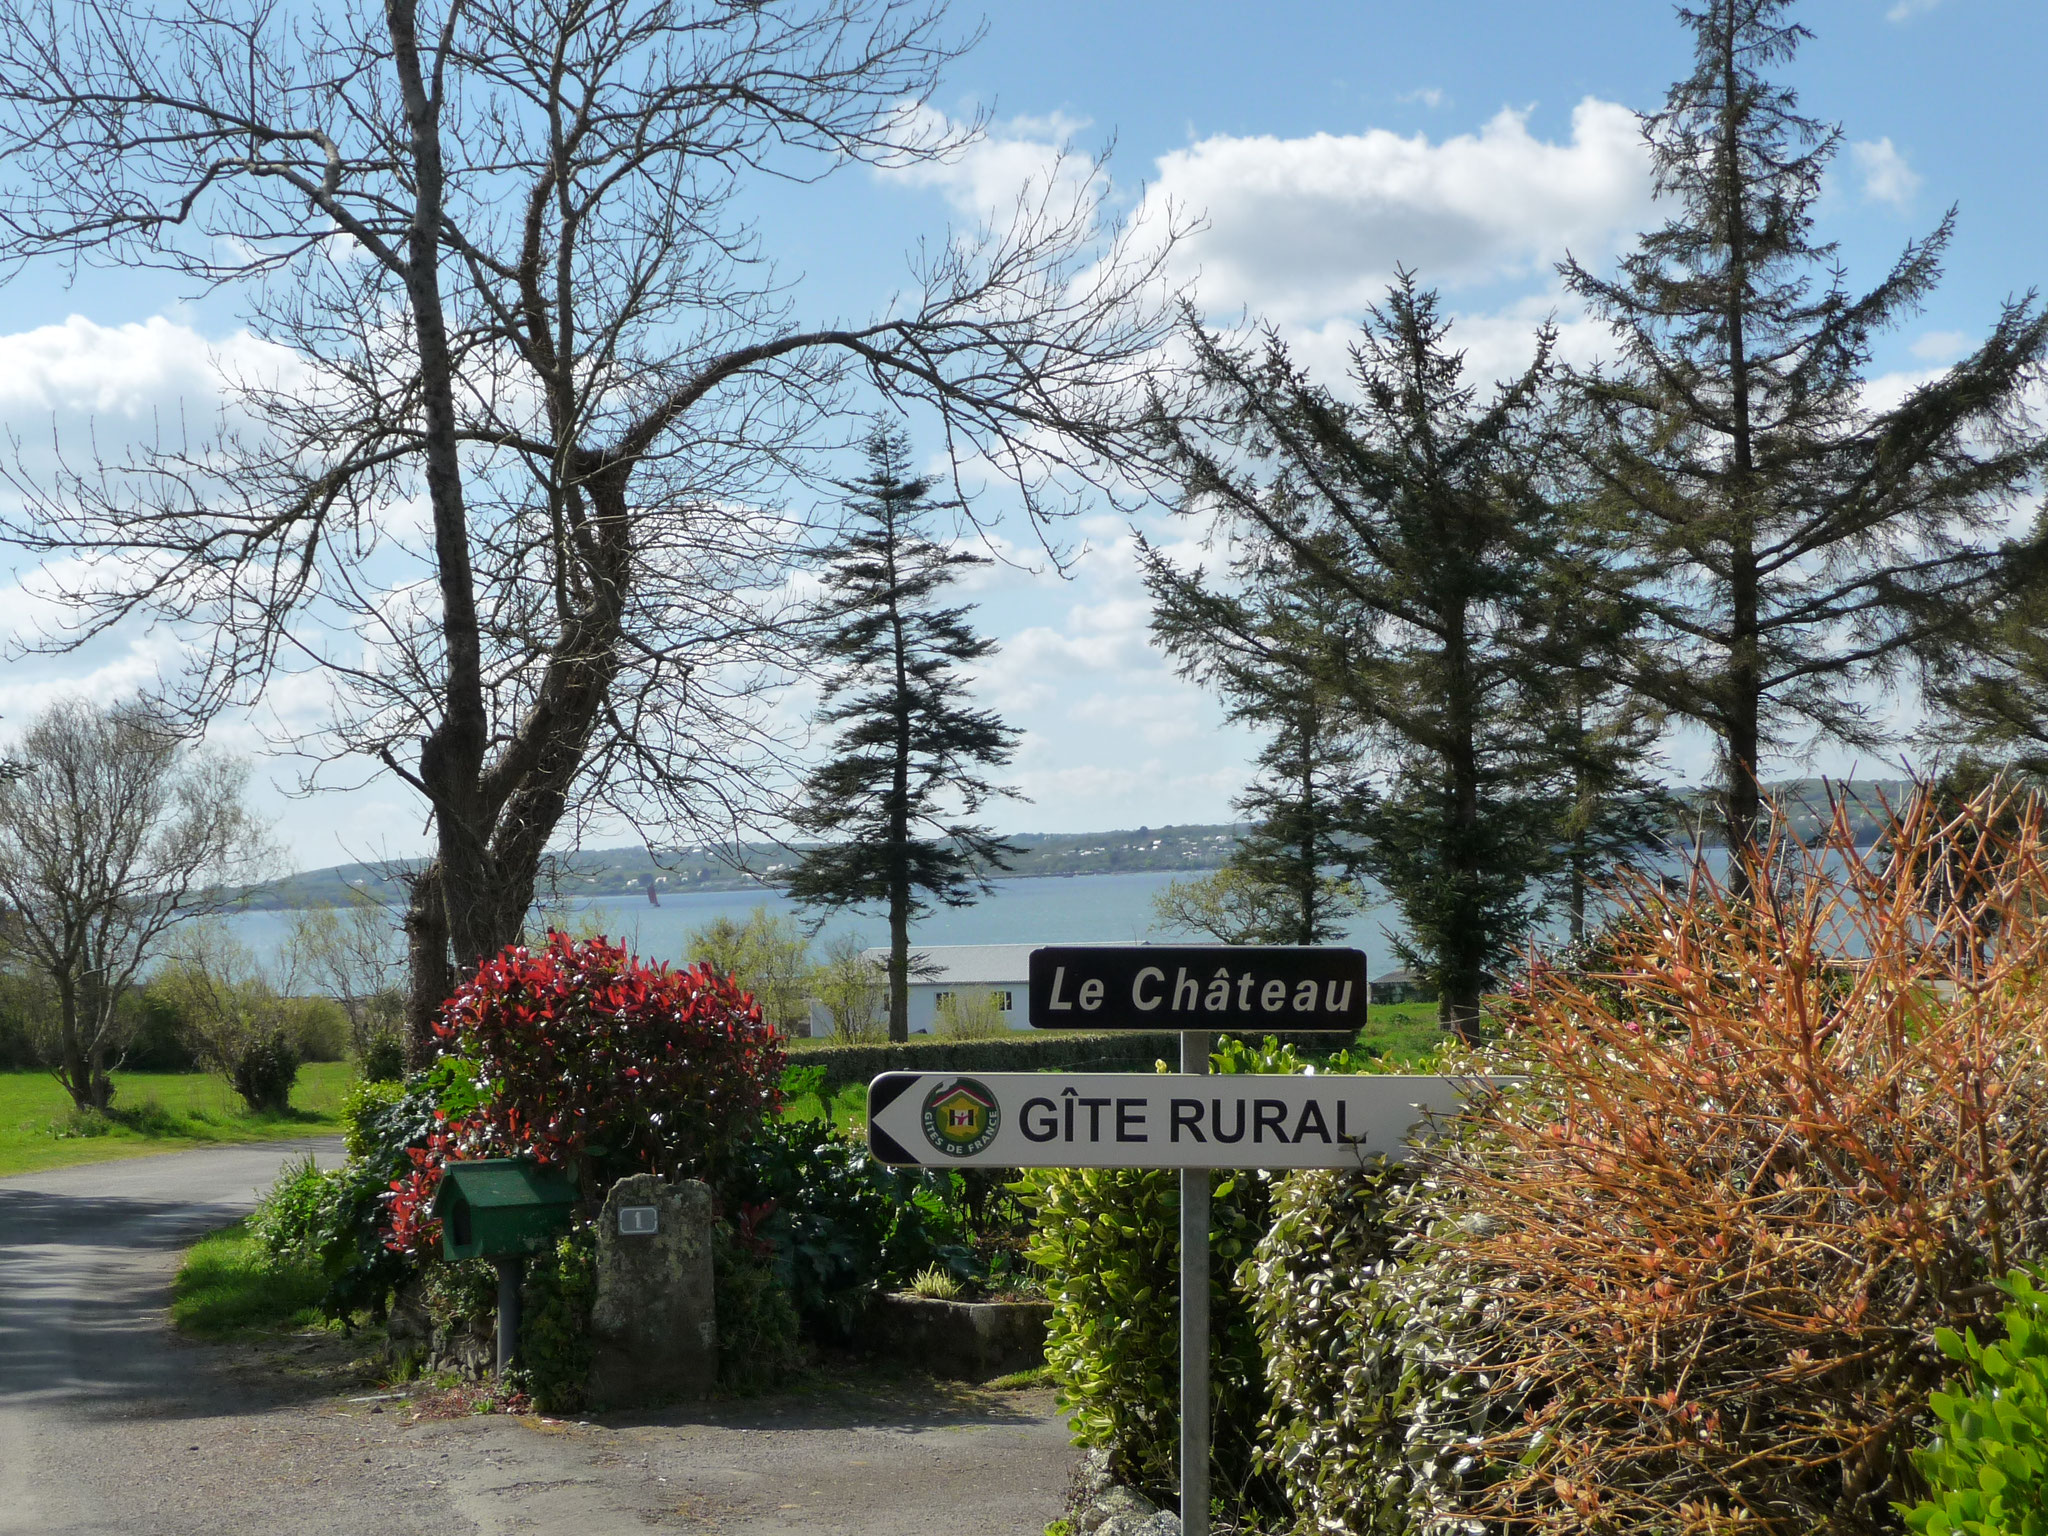 Arrival in La Pointe du Château